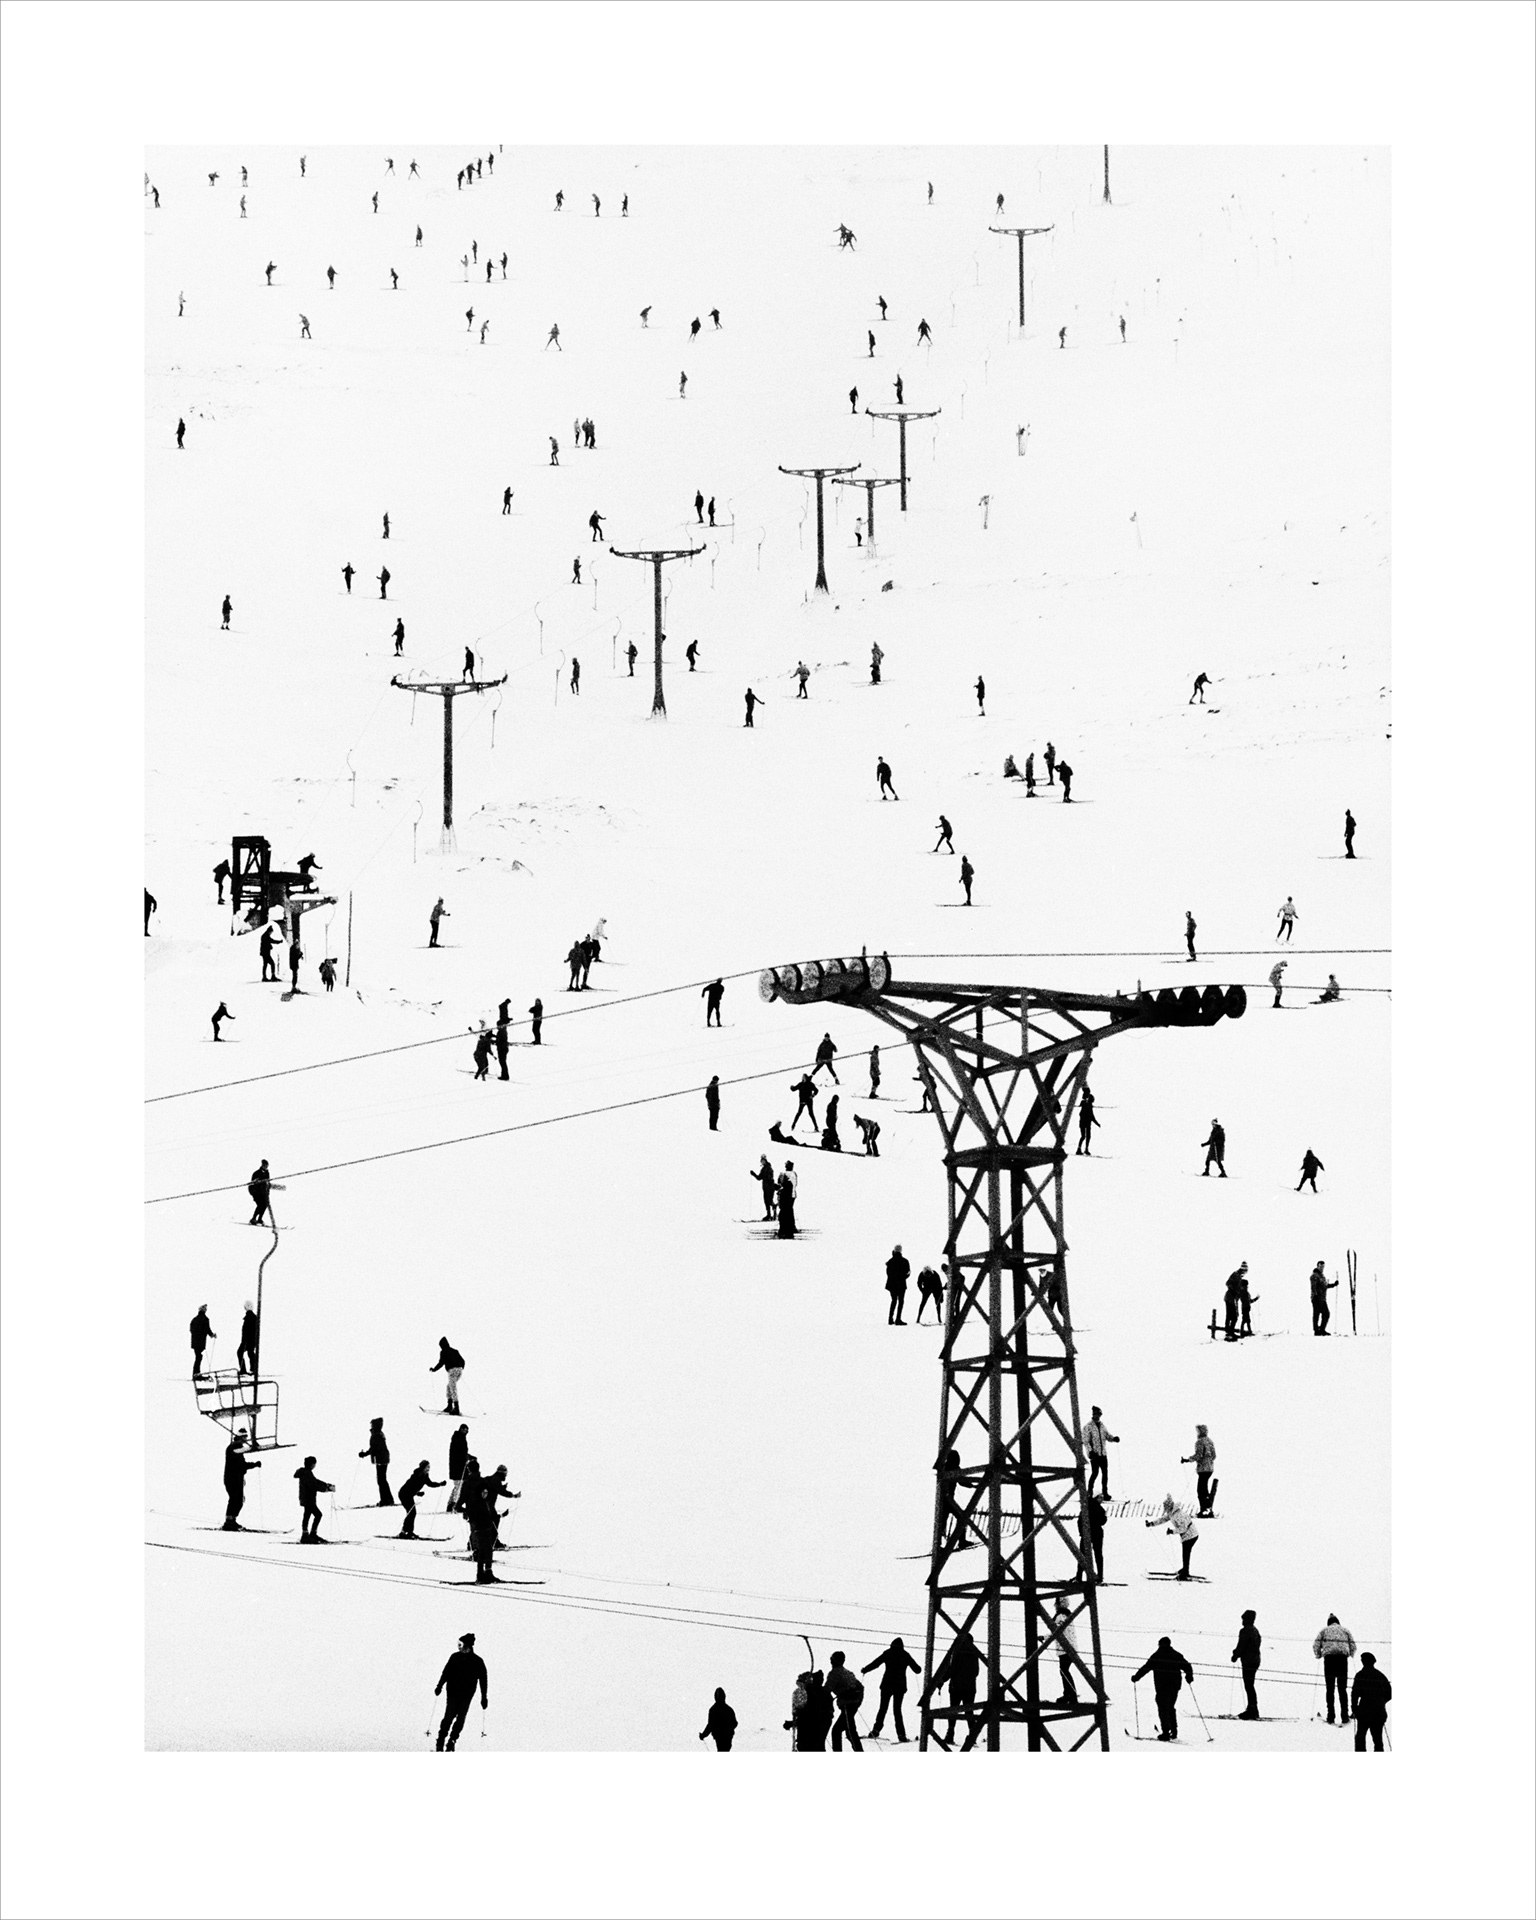 Image of Cairngorm Ski Slopes (1970) by Oscar Marzaroli